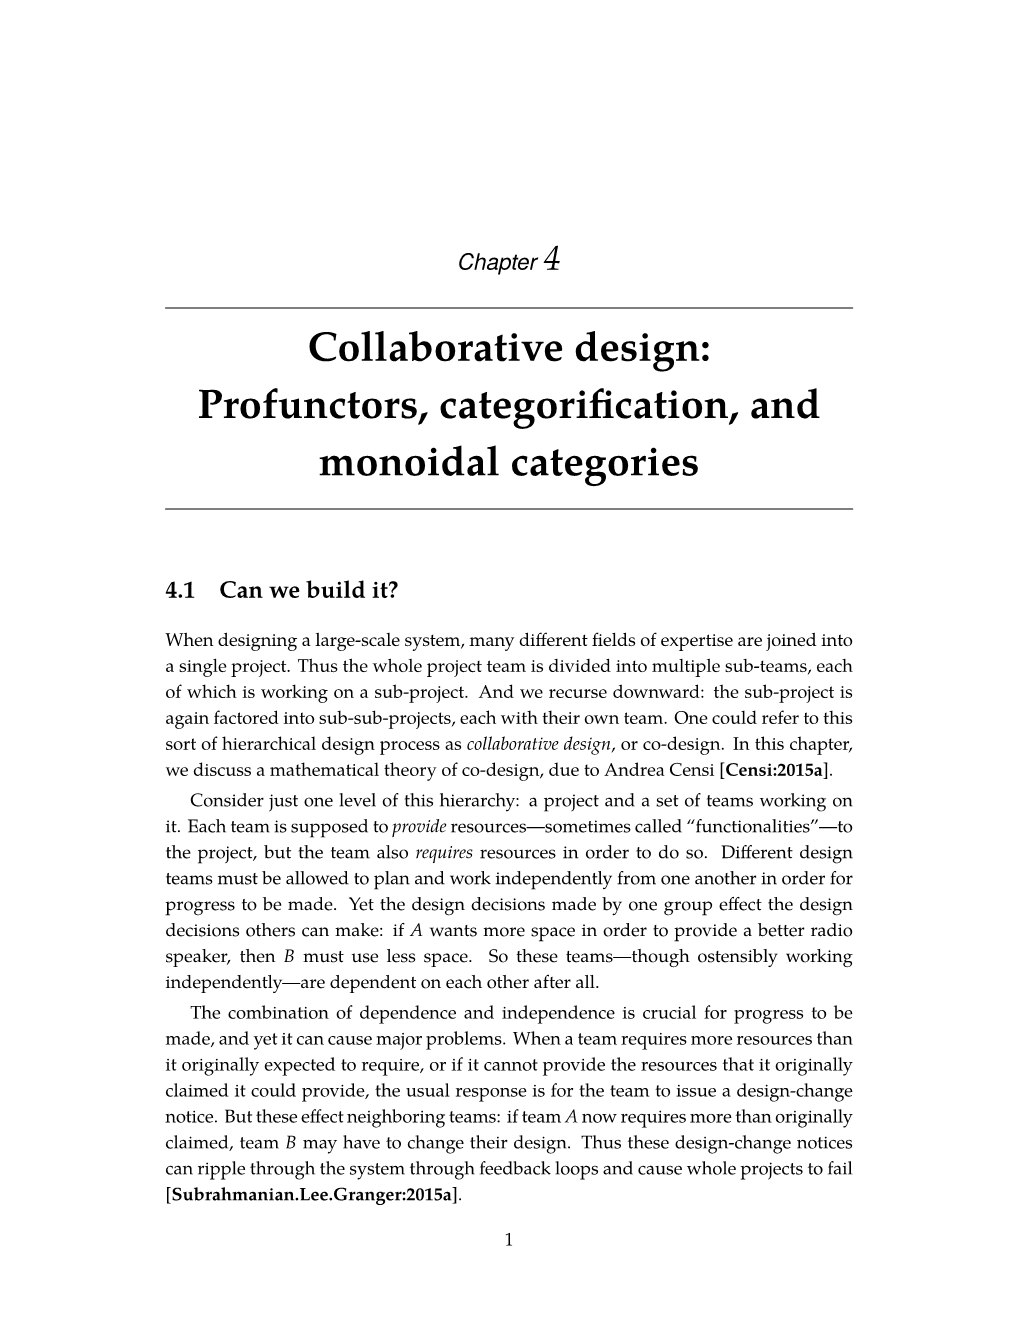 Collaborative Design: Profunctors, Categorification, And